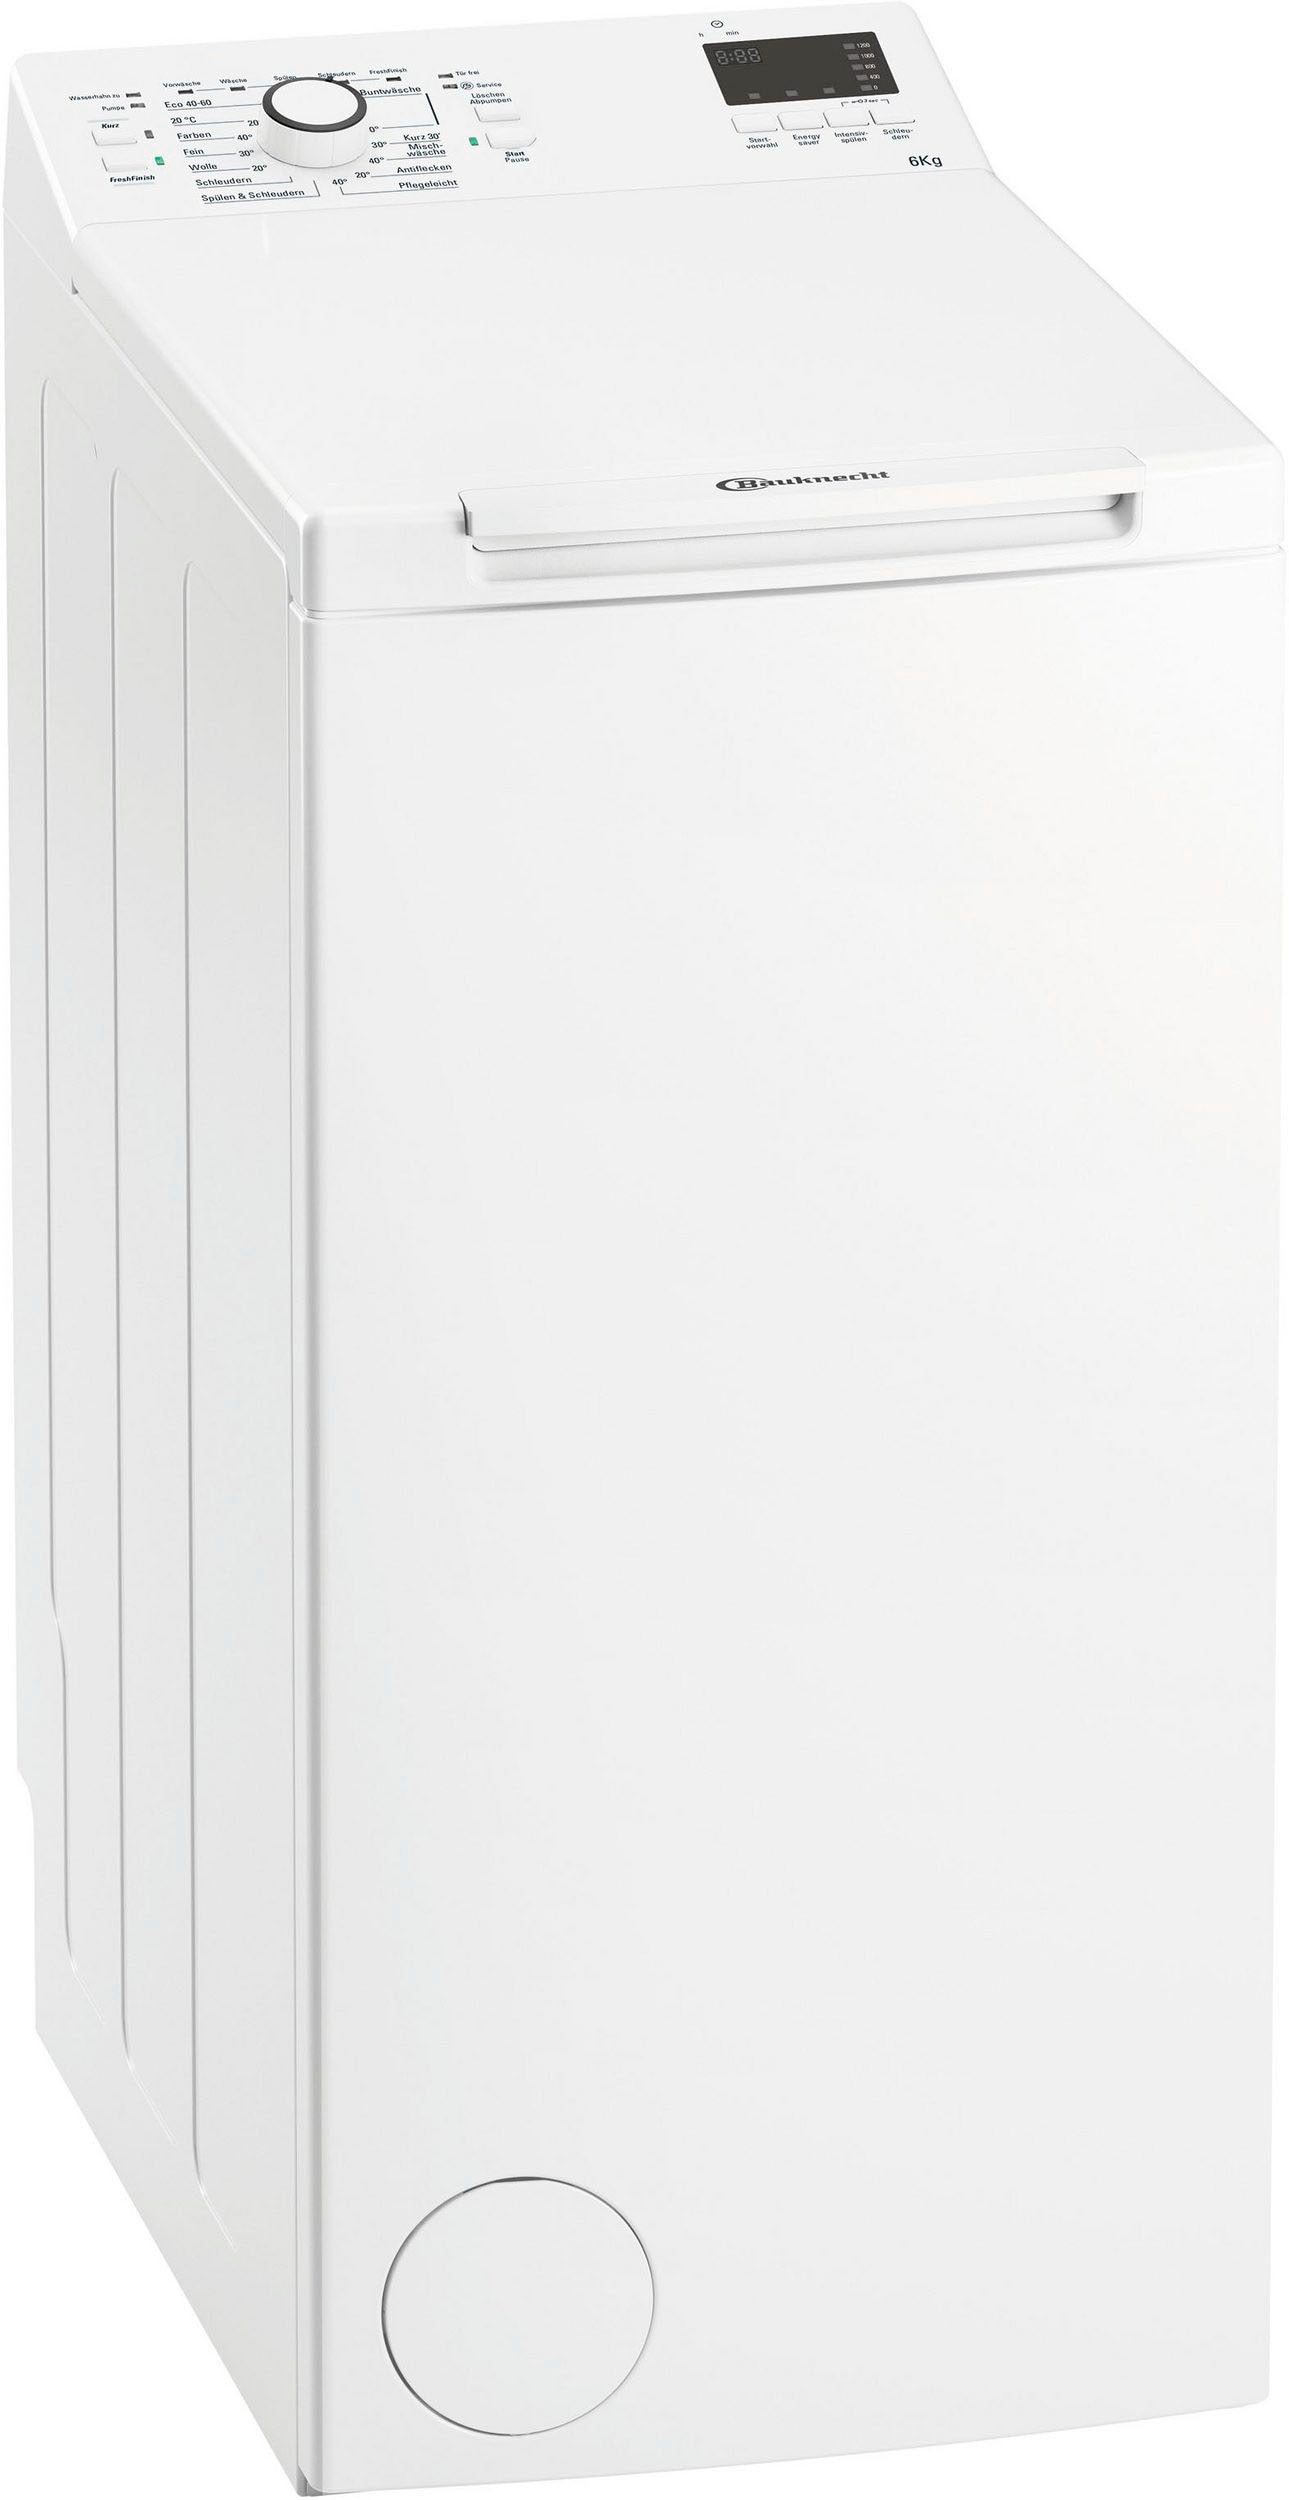 BAUKNECHT Waschmaschine Toplader PRIME 652 N, 1200 online kaufen PRIME 6 652 »WAT U/min N«, DI WAT DI kg